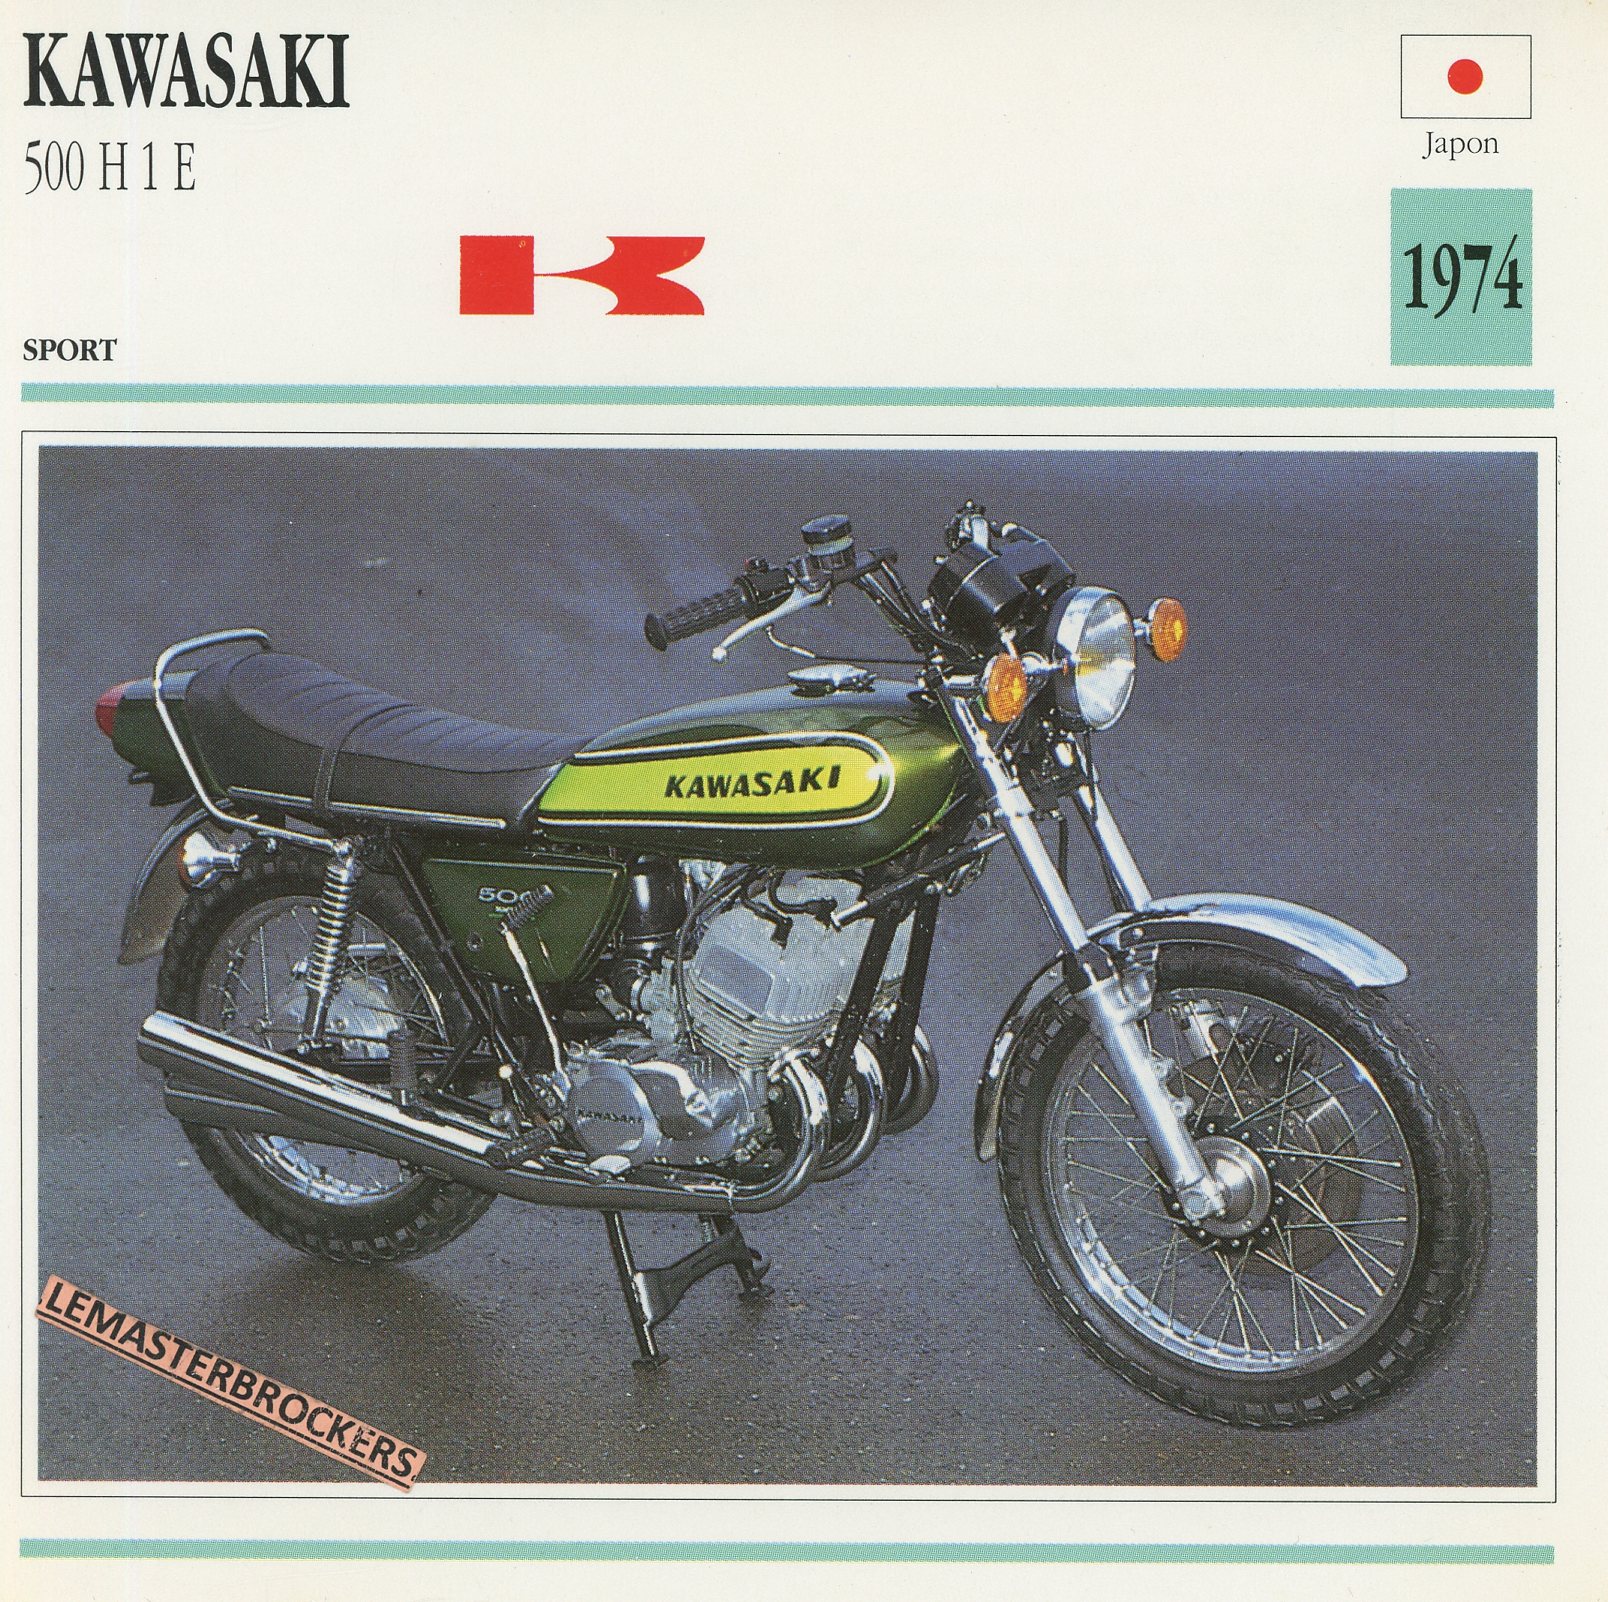 KAWASAKI-500-H1E-1974-FICHE-MOTO-KAWA-LEMASTERBROCKERS